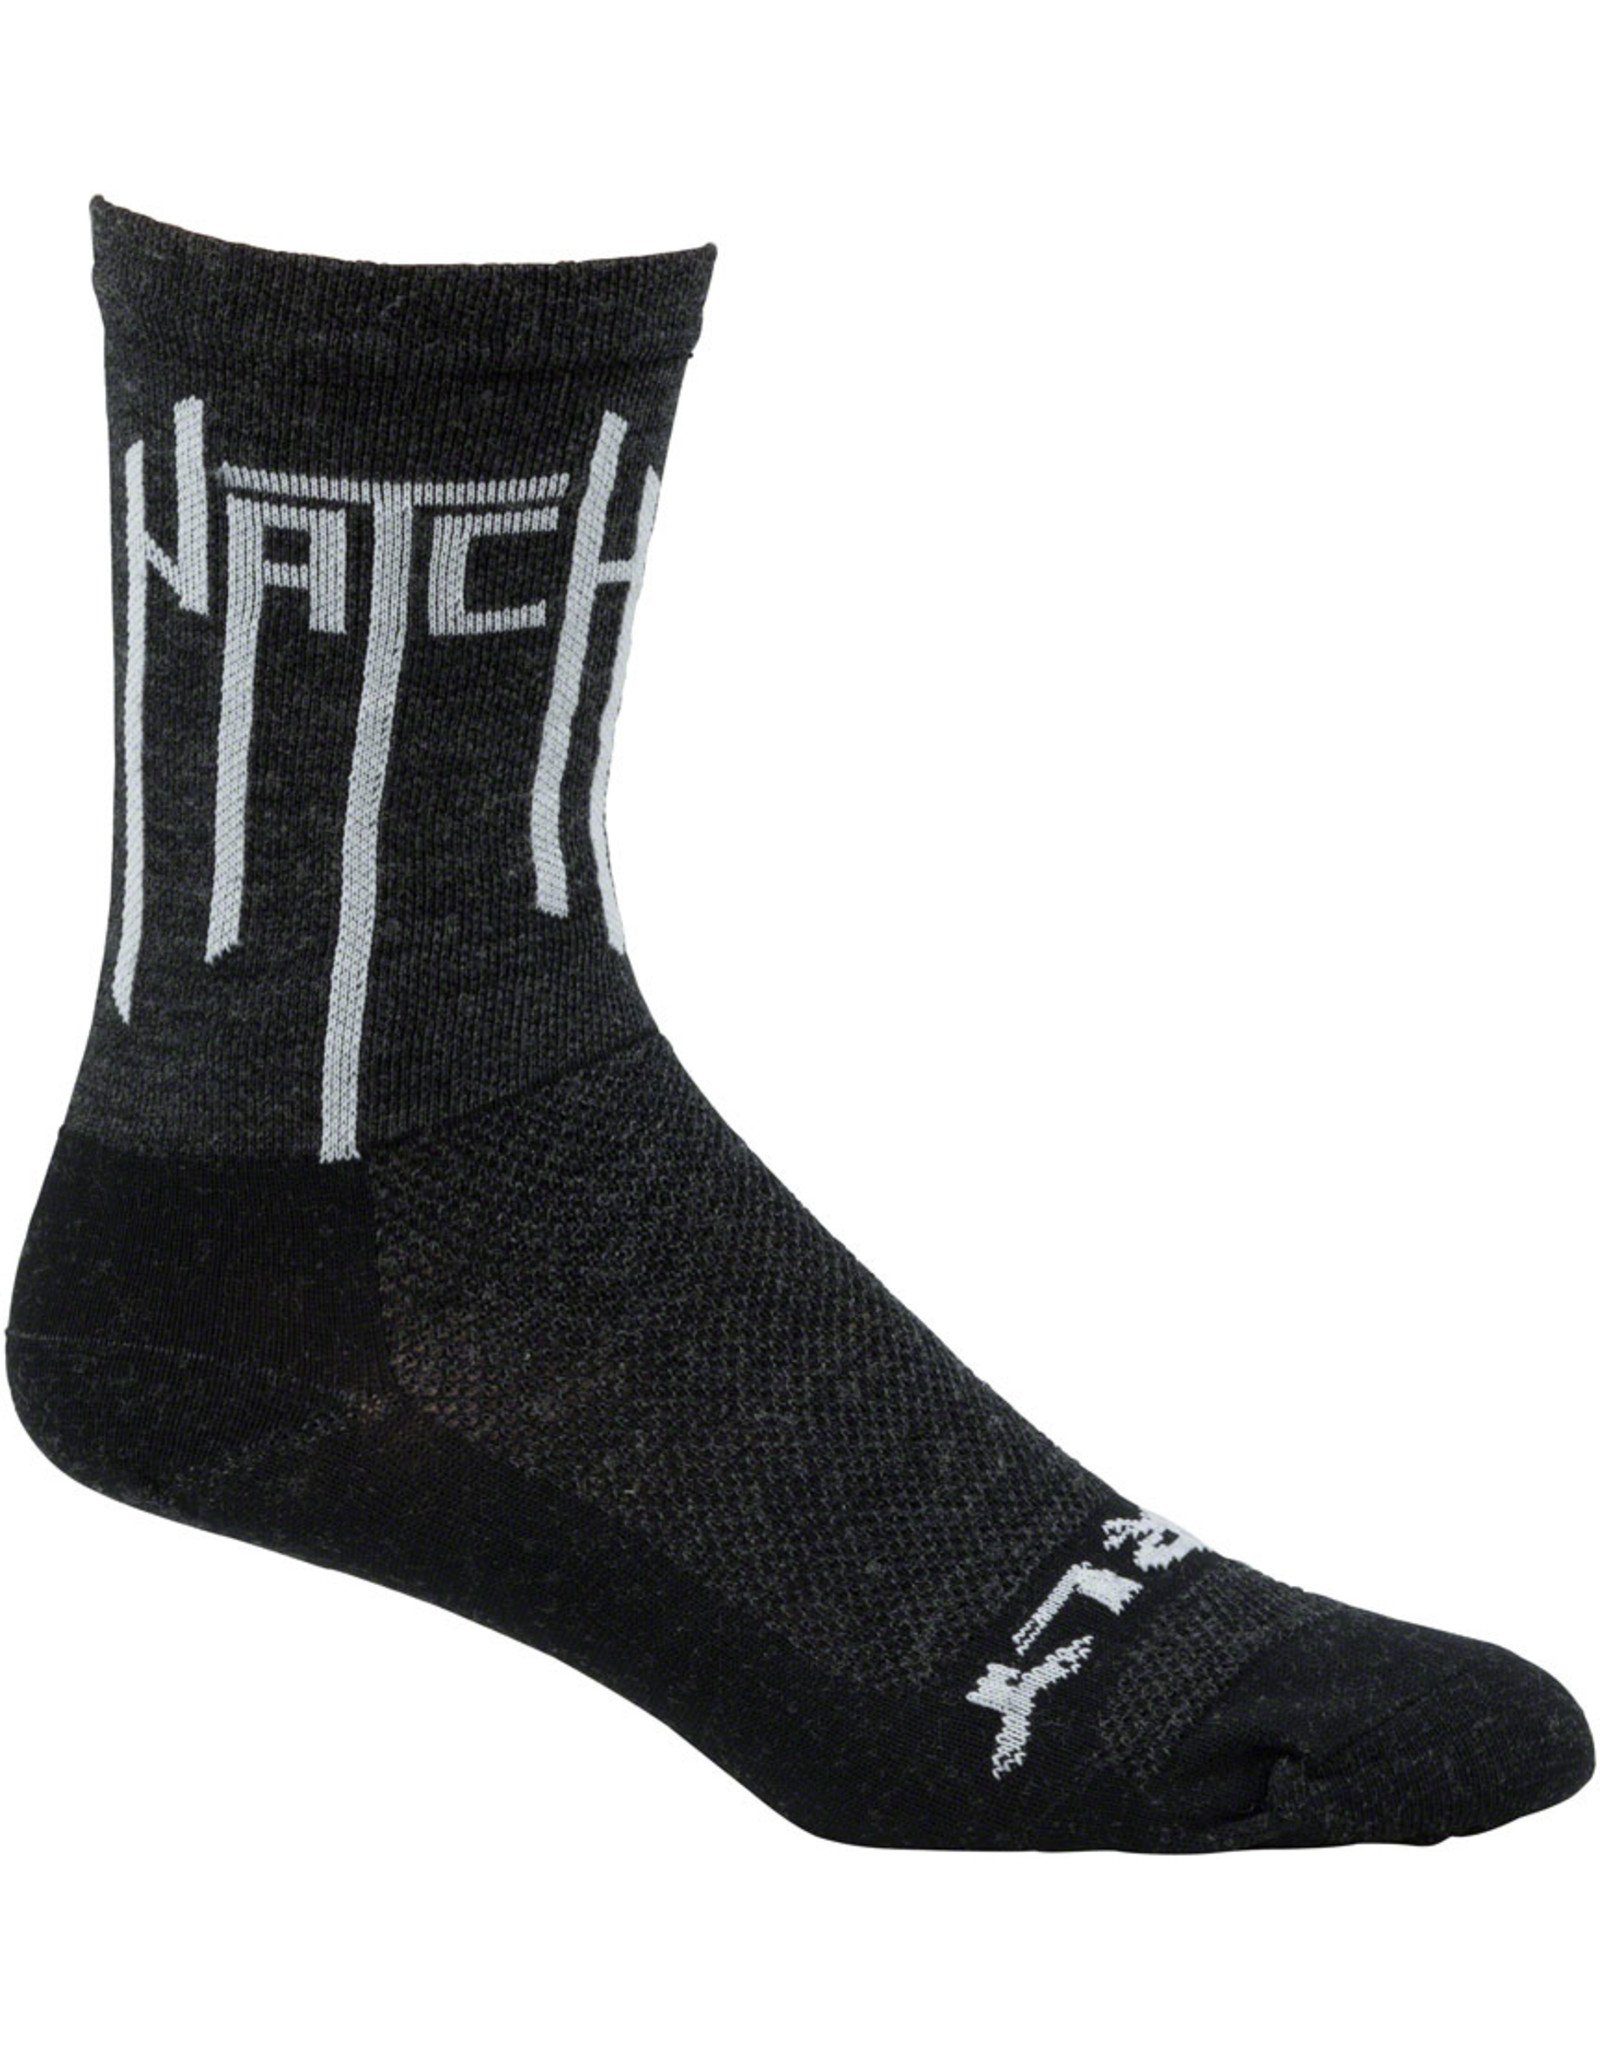 Surly Surly Natch Wool Socks - 5 inch, Black/White